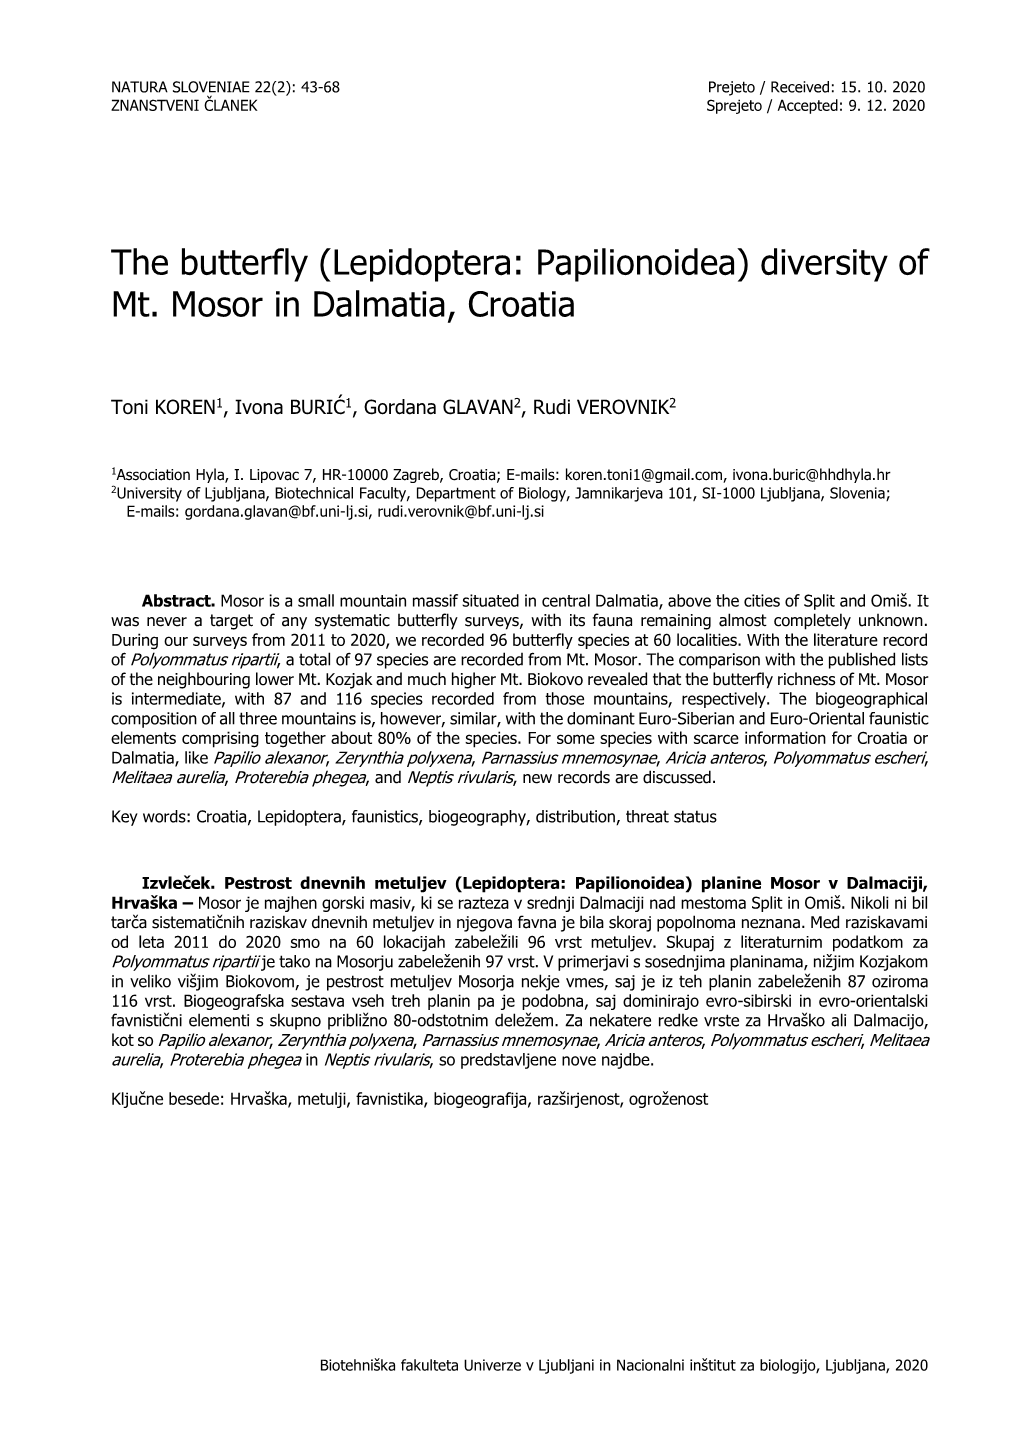 (Lepidoptera: Papilionoidea) Diversity of Mt. Mosor in Dalmatia, Croatia